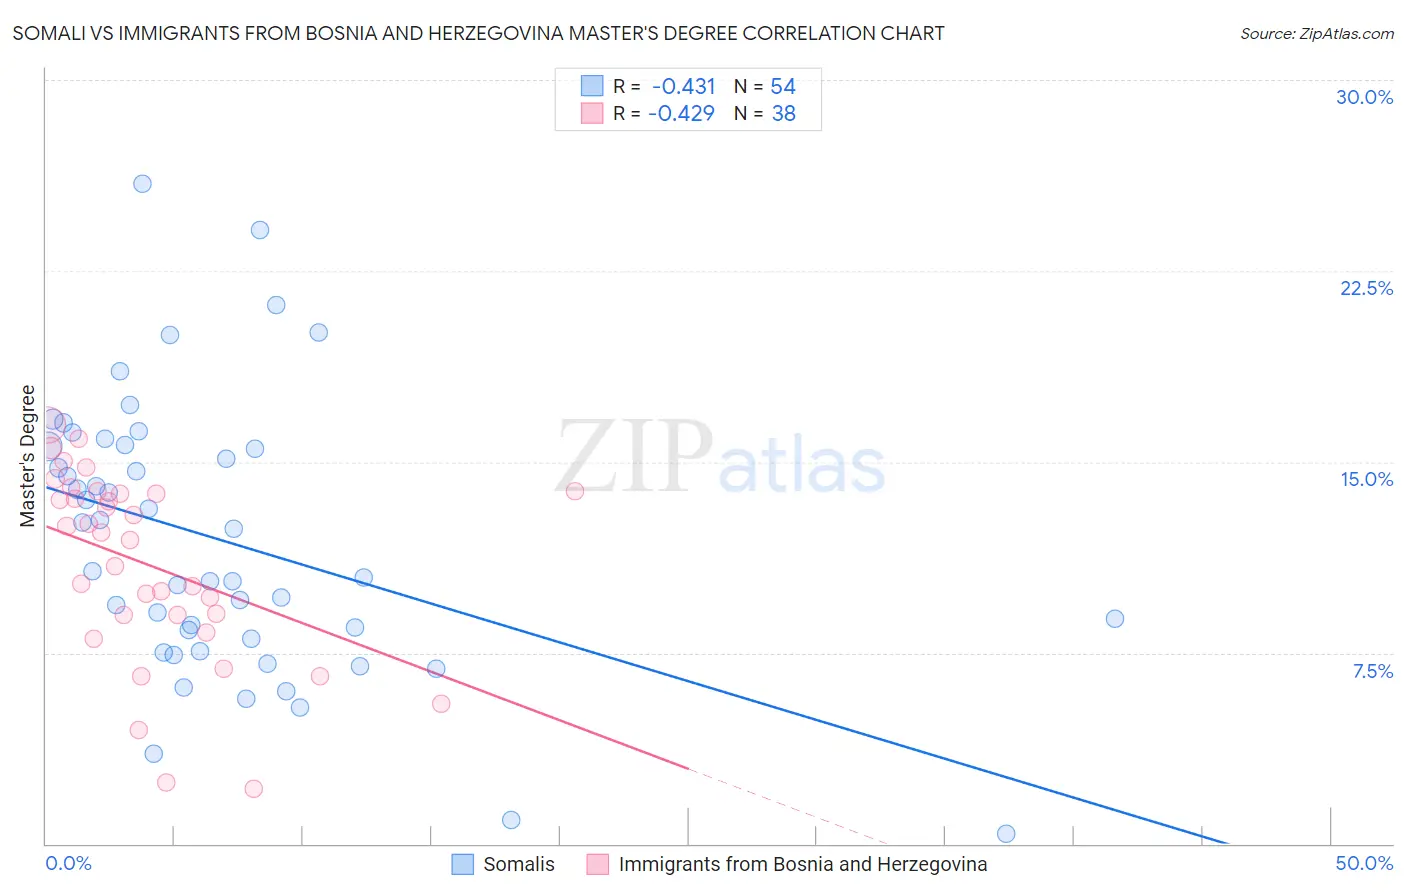 Somali vs Immigrants from Bosnia and Herzegovina Master's Degree